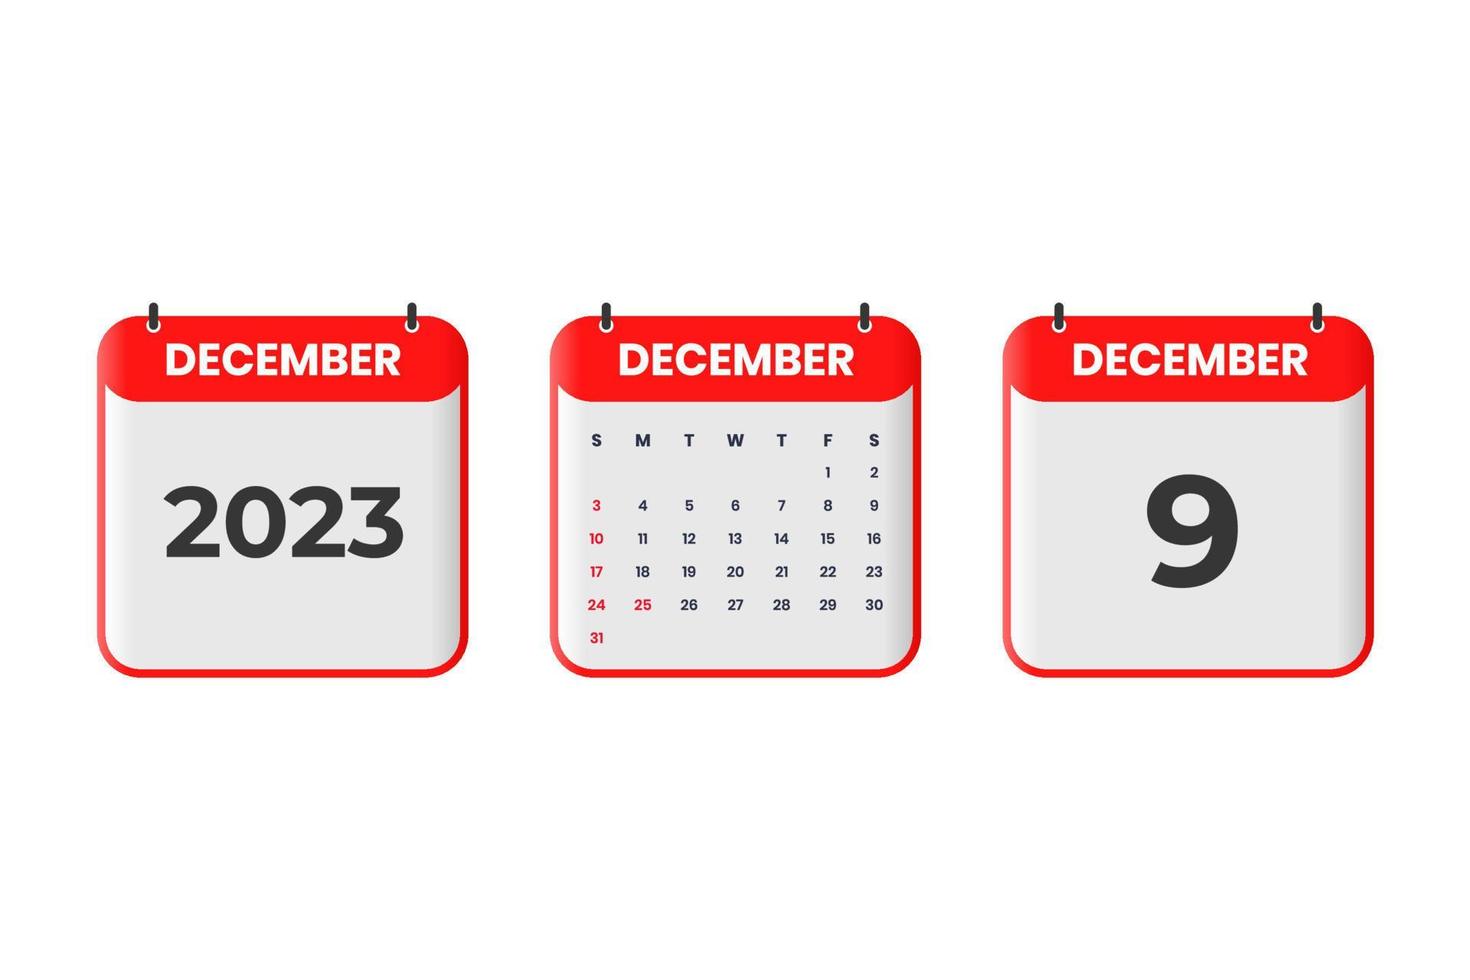 diseño de calendario de diciembre de 2023. 9 de diciembre de 2023 icono de calendario para horario, cita, concepto de fecha importante vector